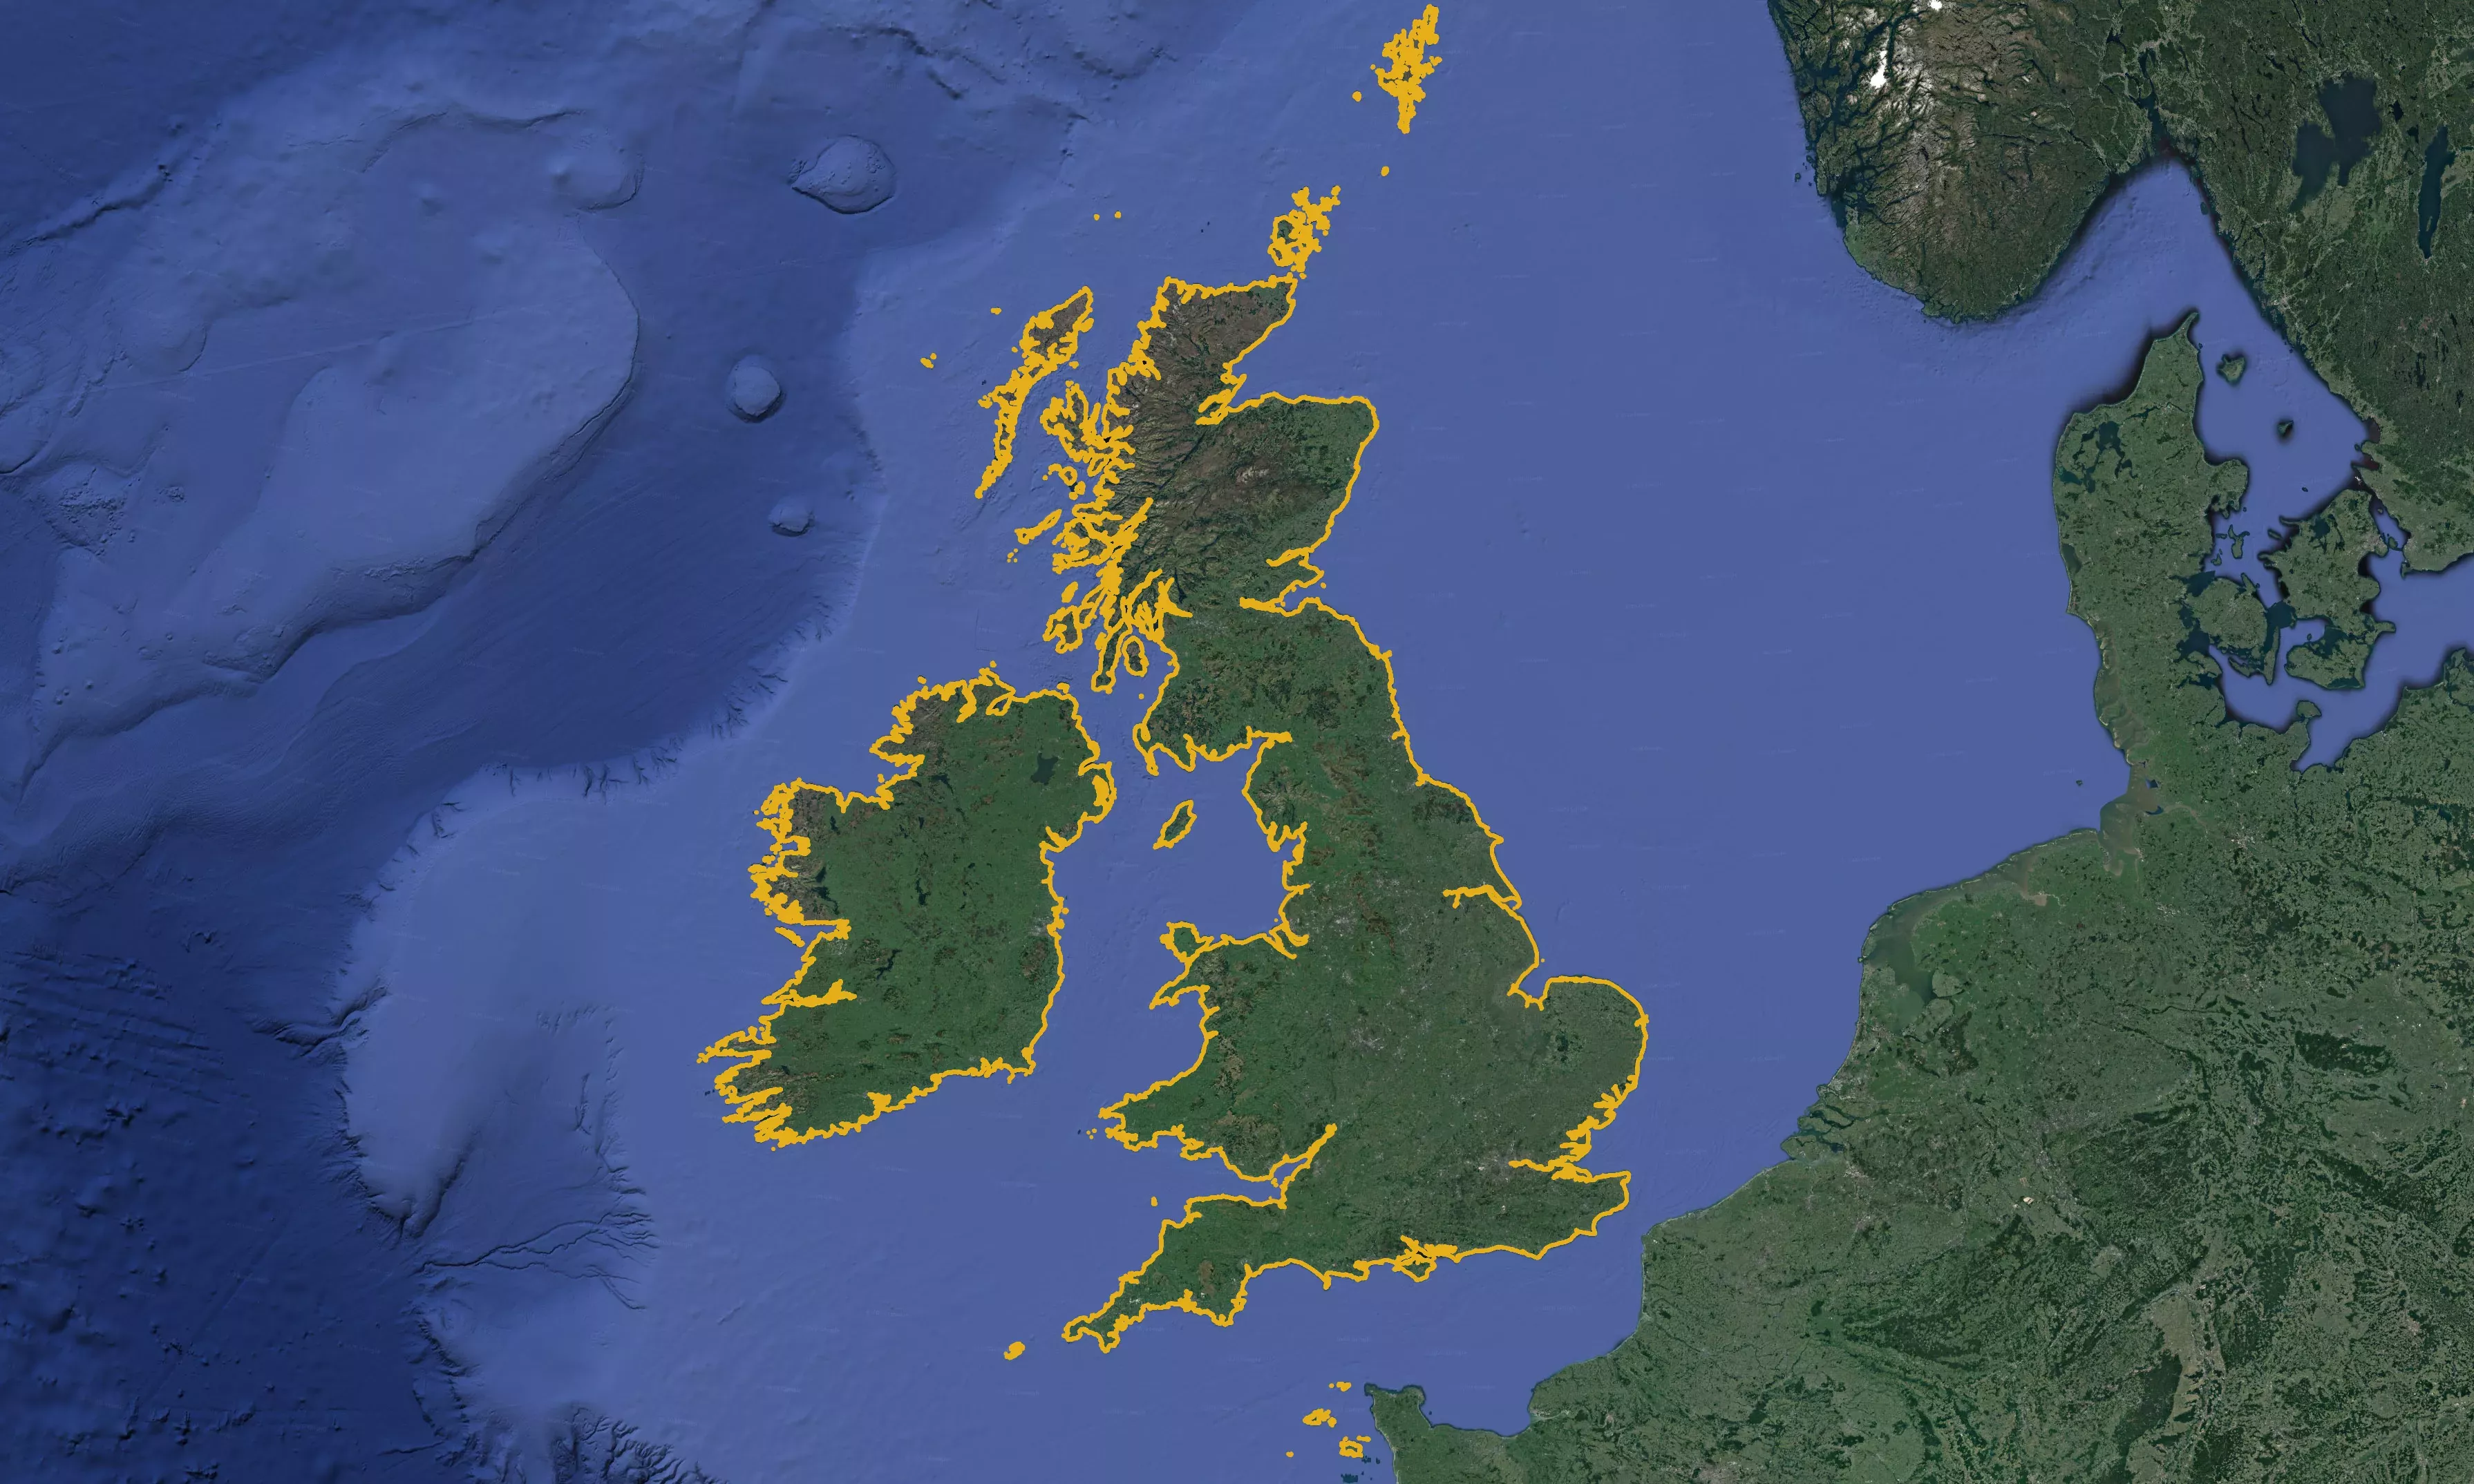 Coastline data set of the UK